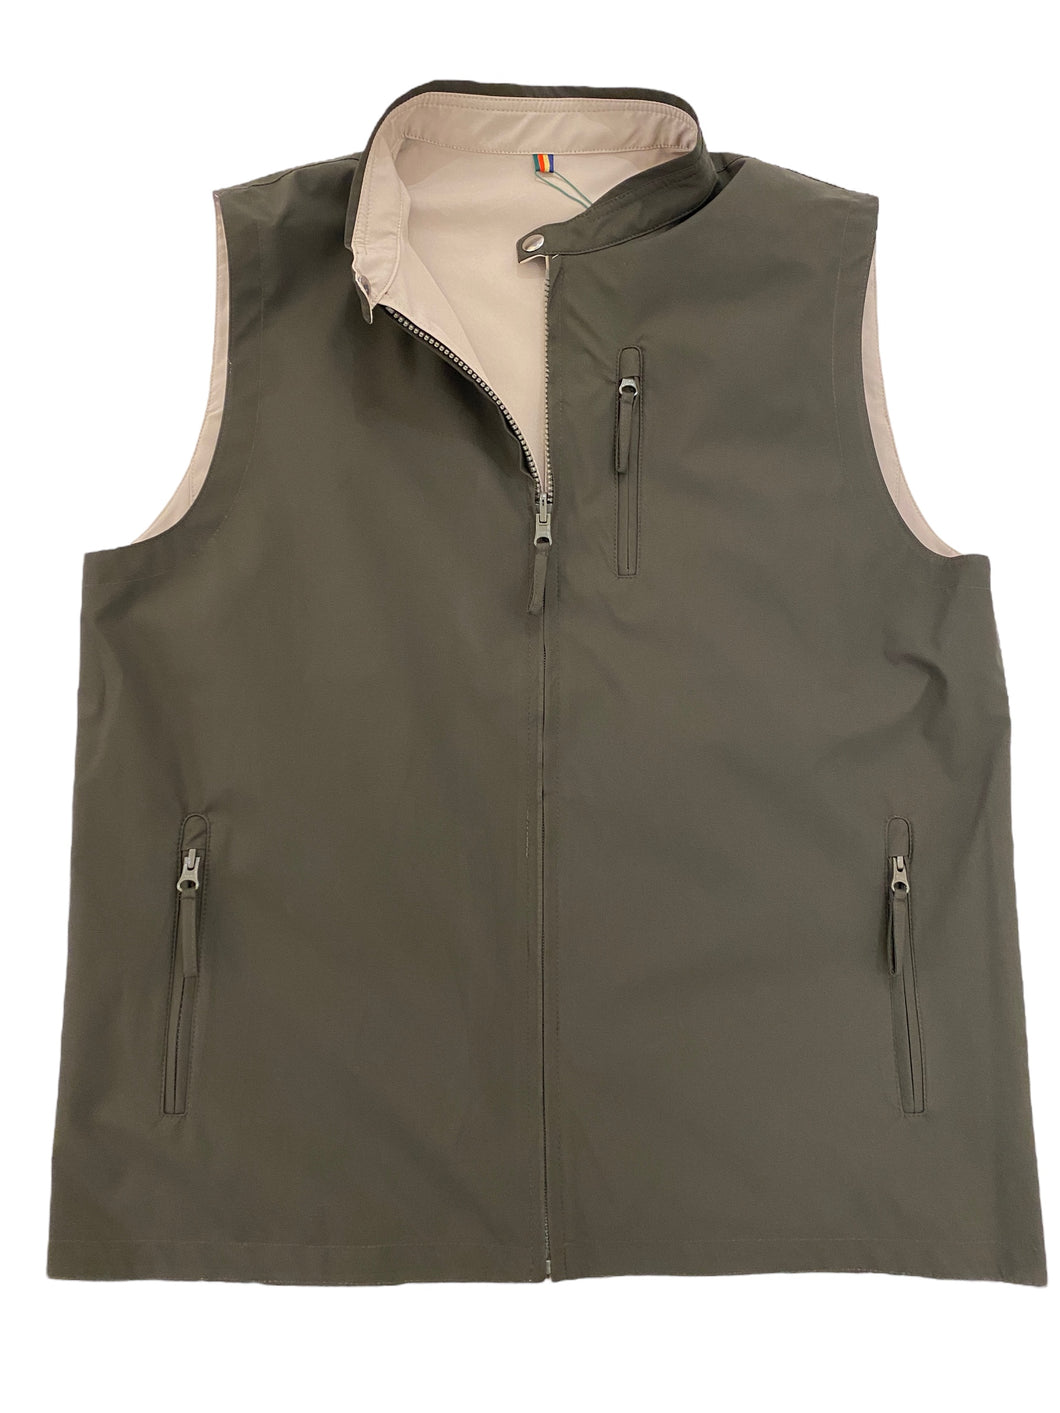 Alan Paine Lettoch Reversible Shell Vest Olive/Khaki